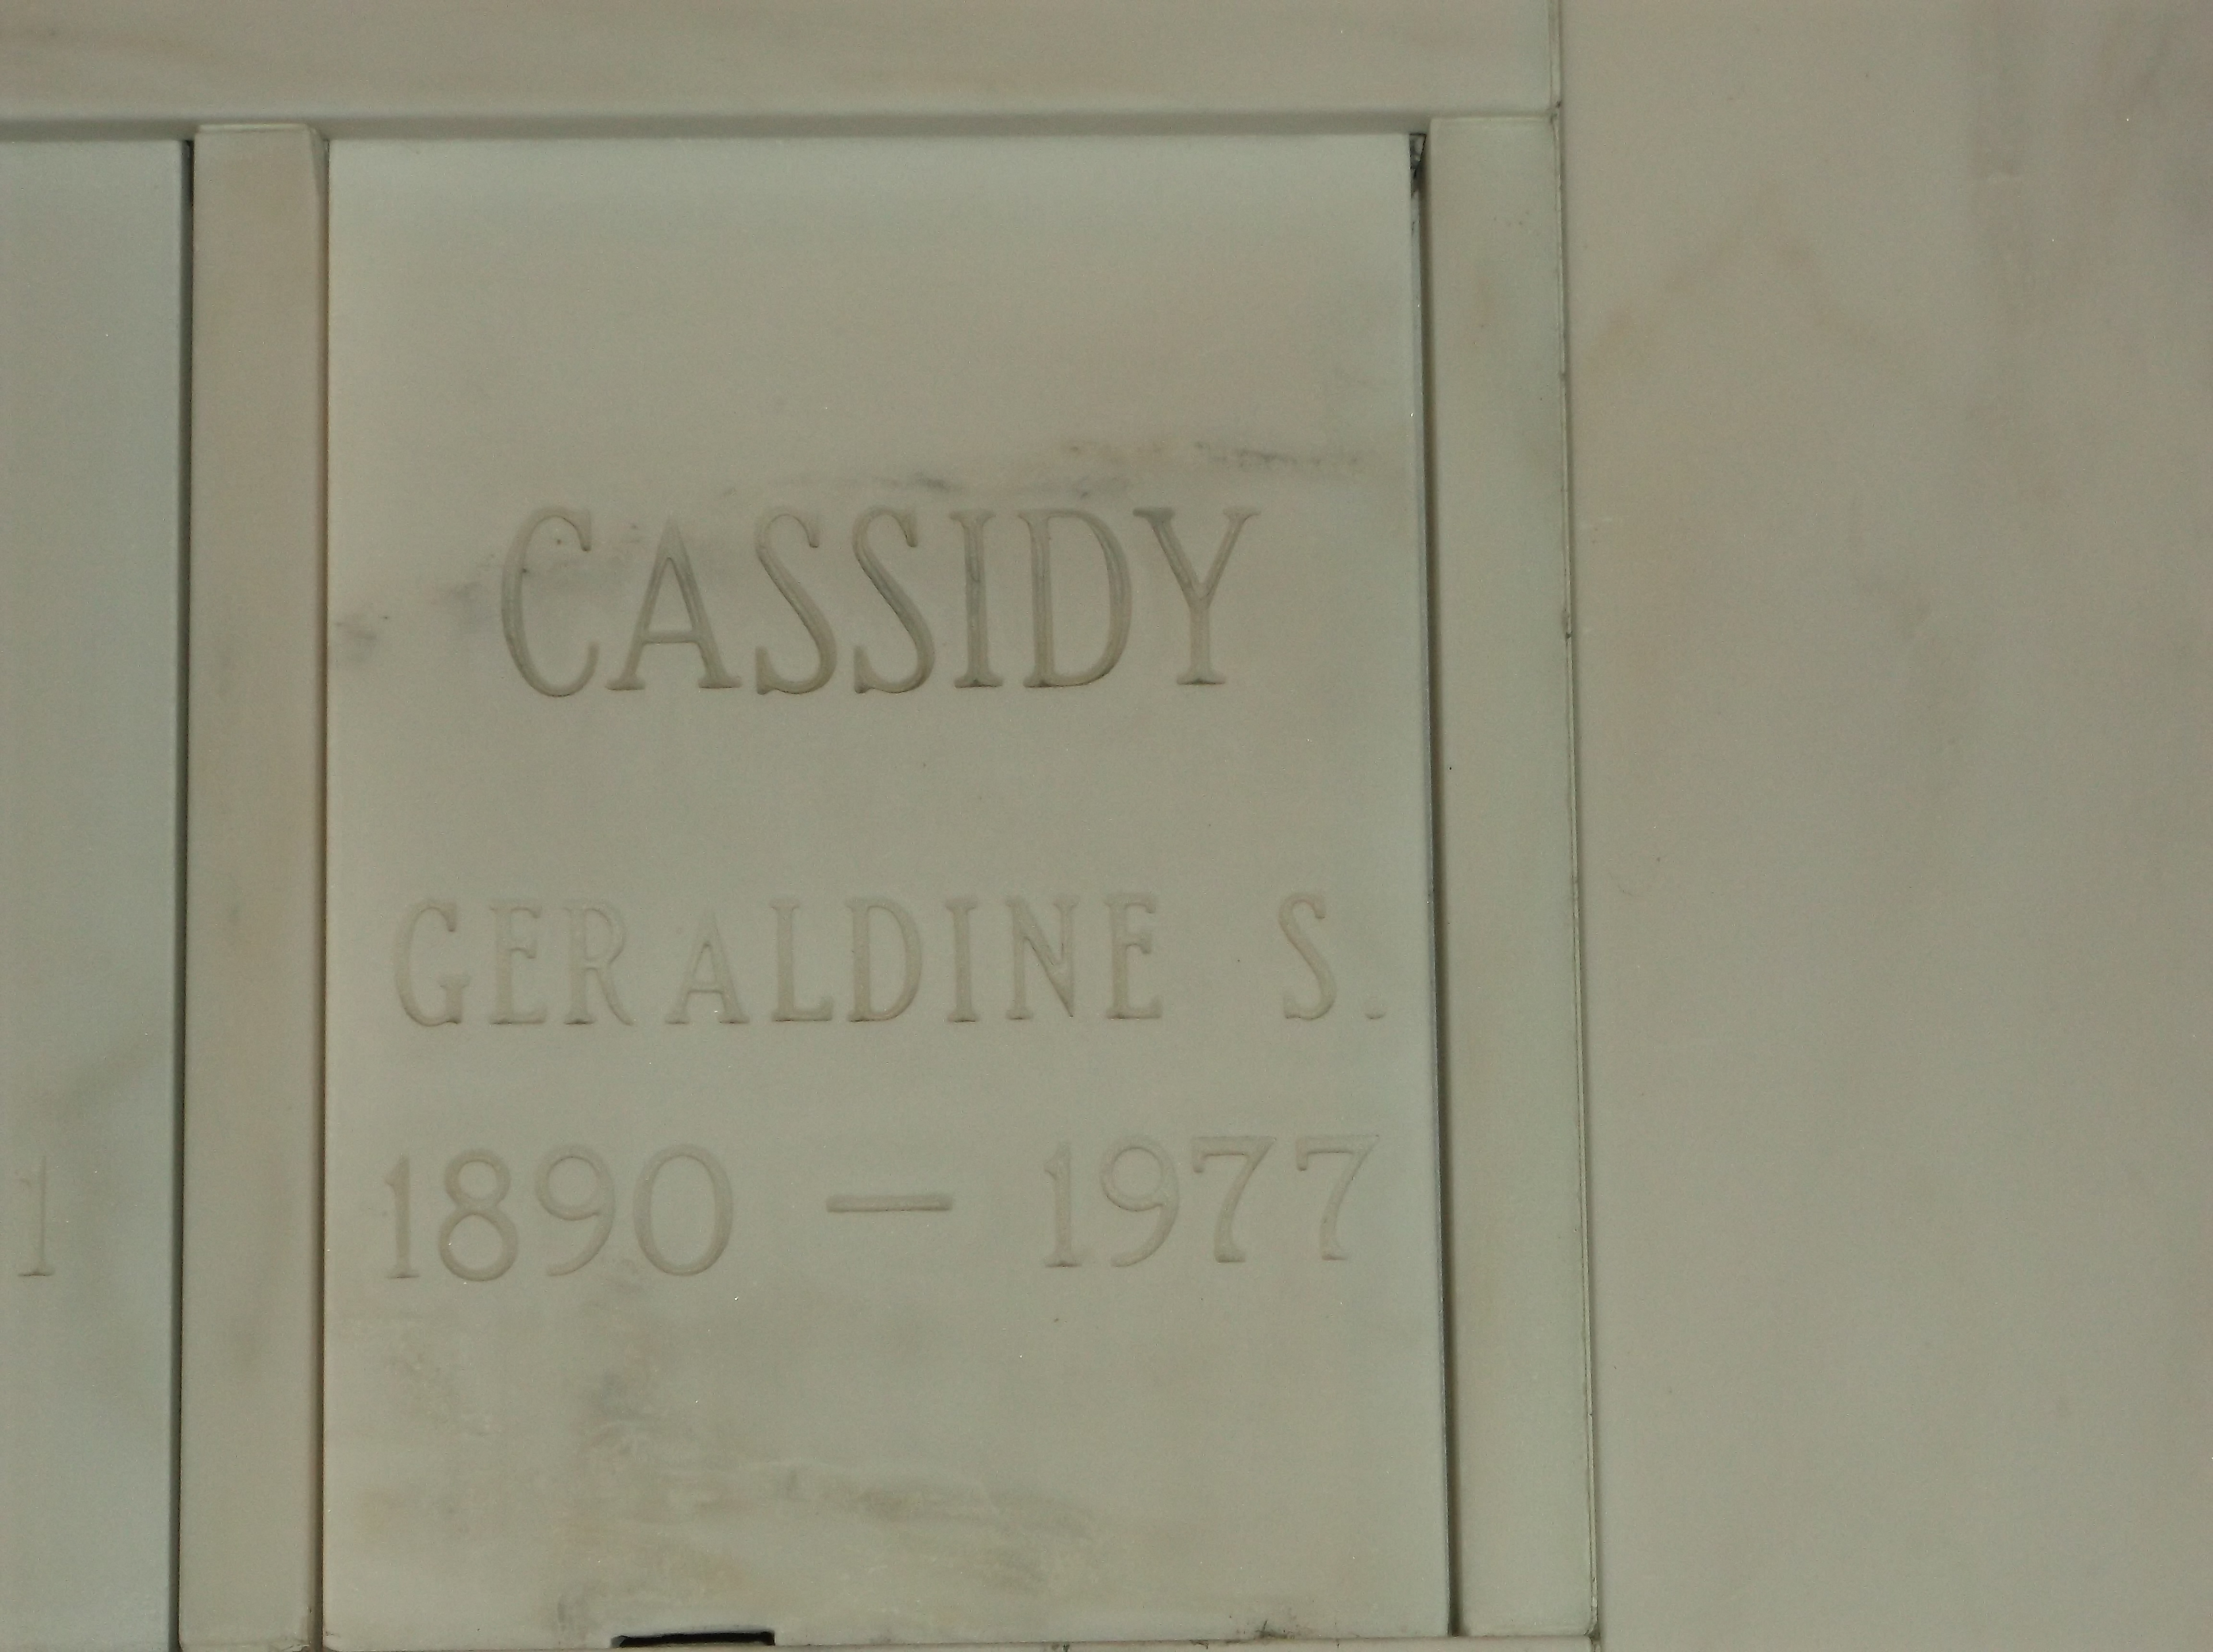 Geraldine S Cassidy